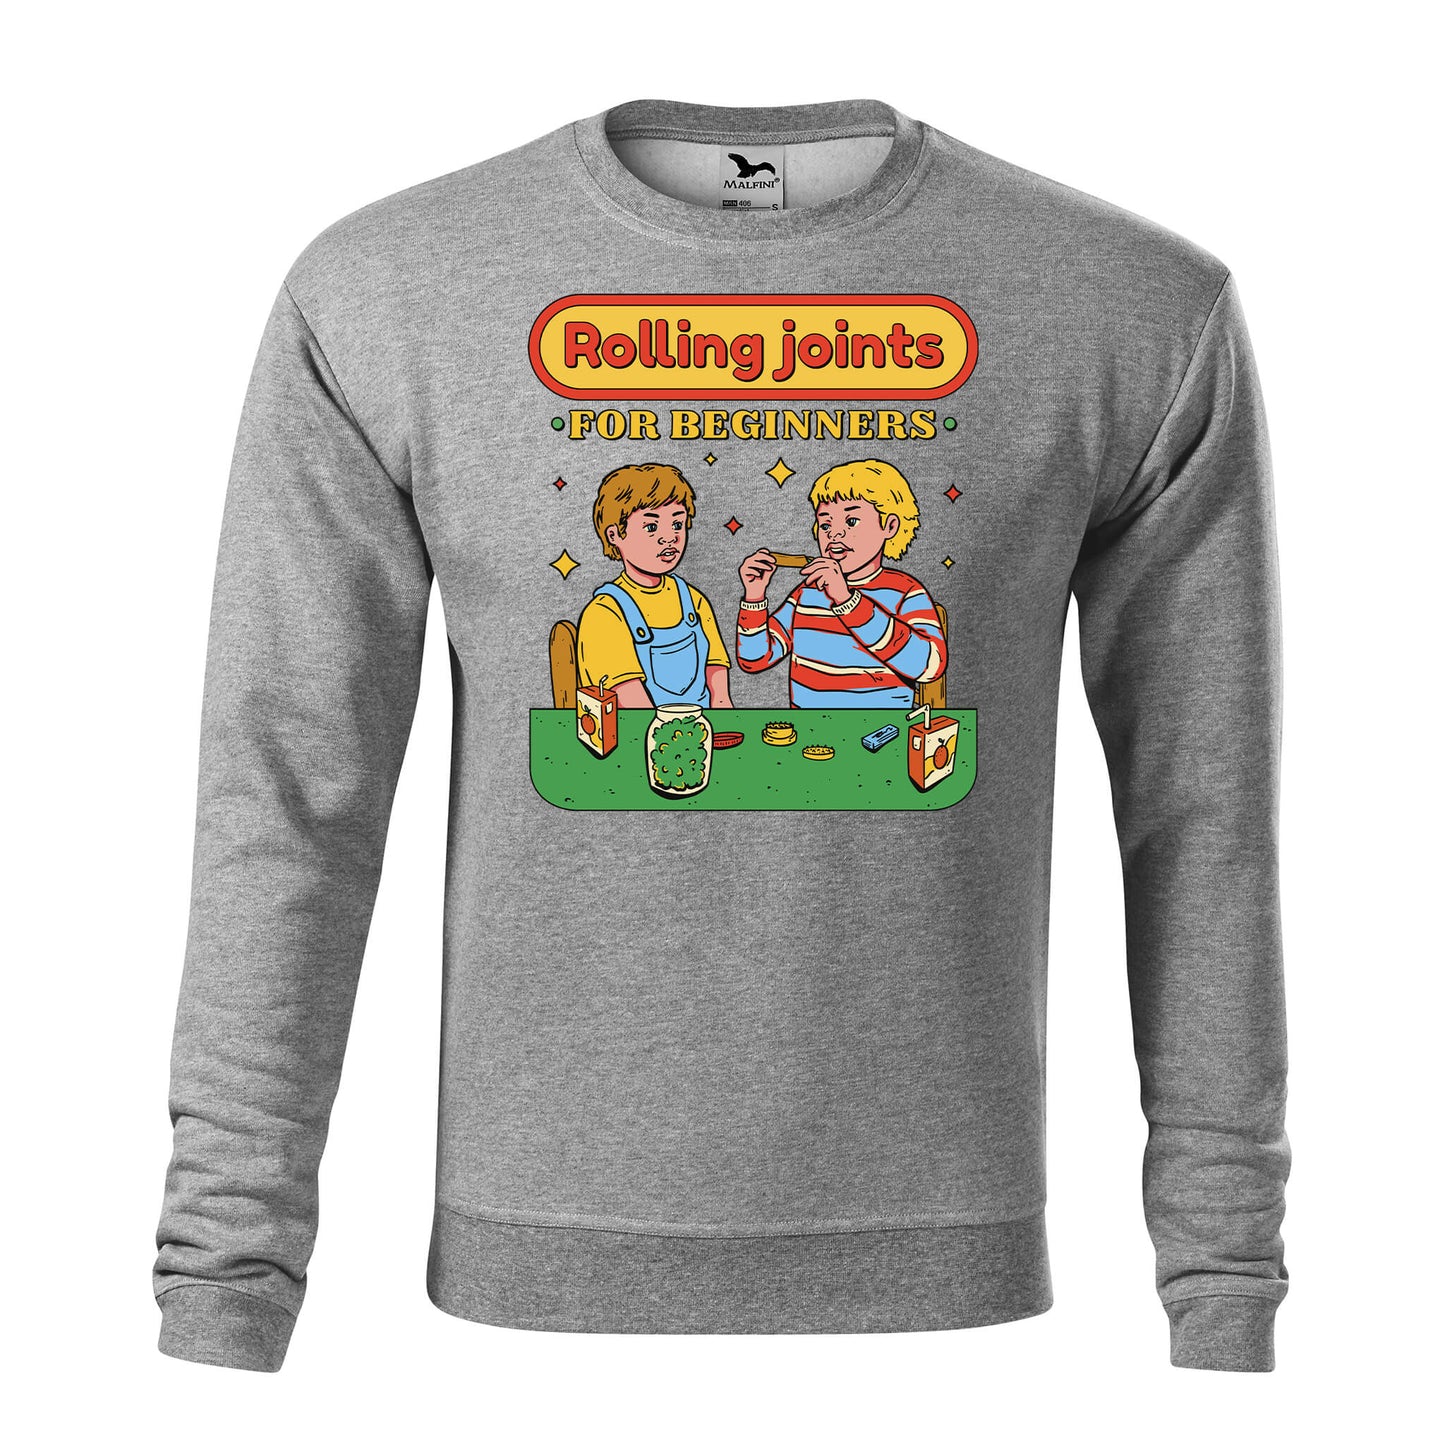 Rolling joints sweatshirt - mens